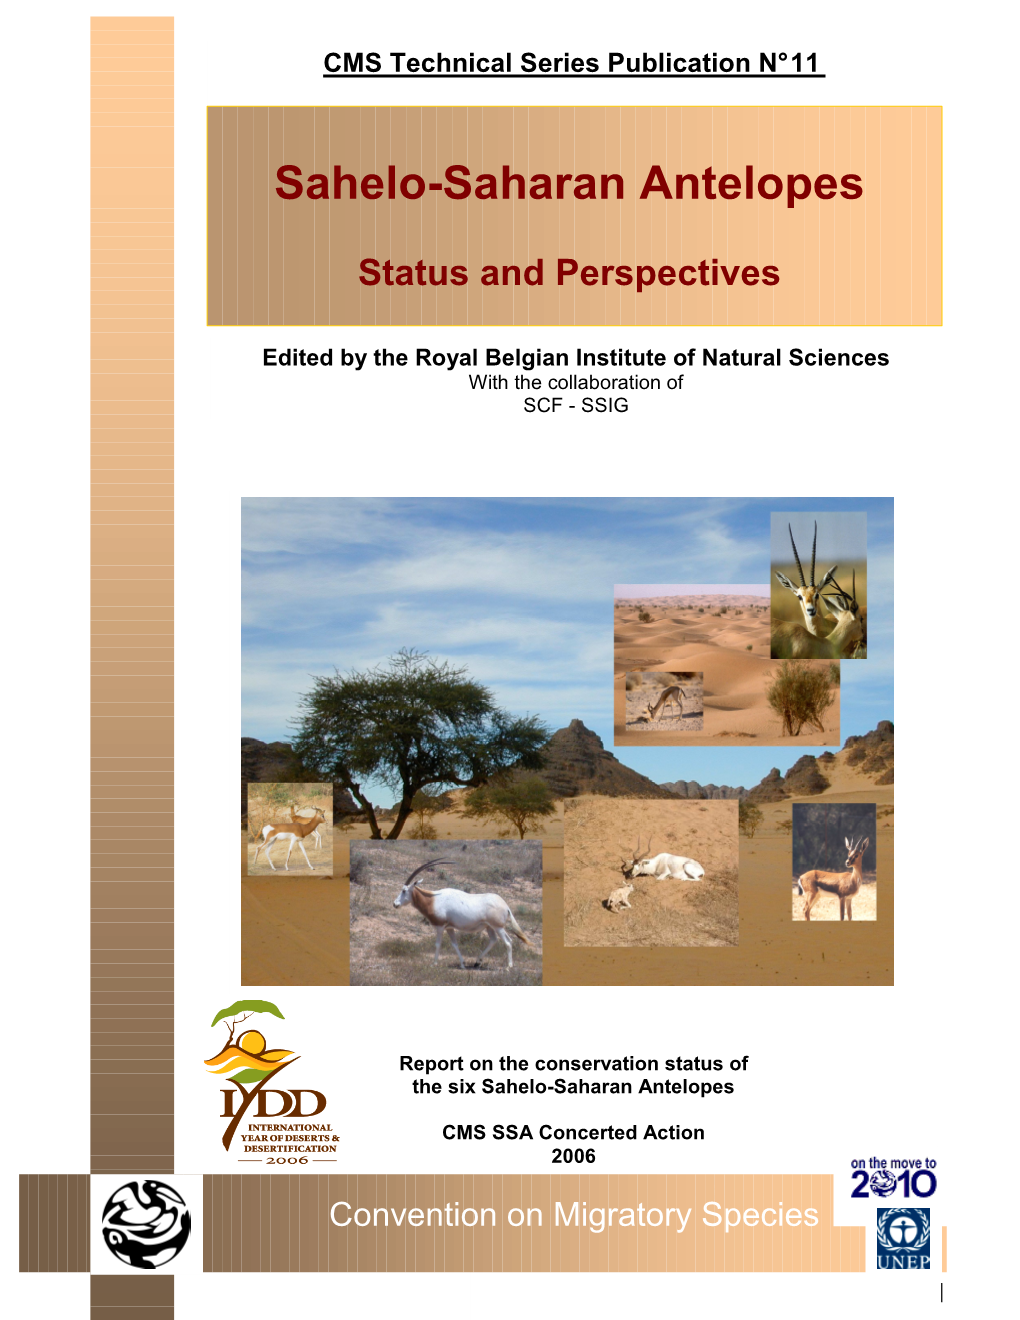 Sahelo-Saharan Antelopes